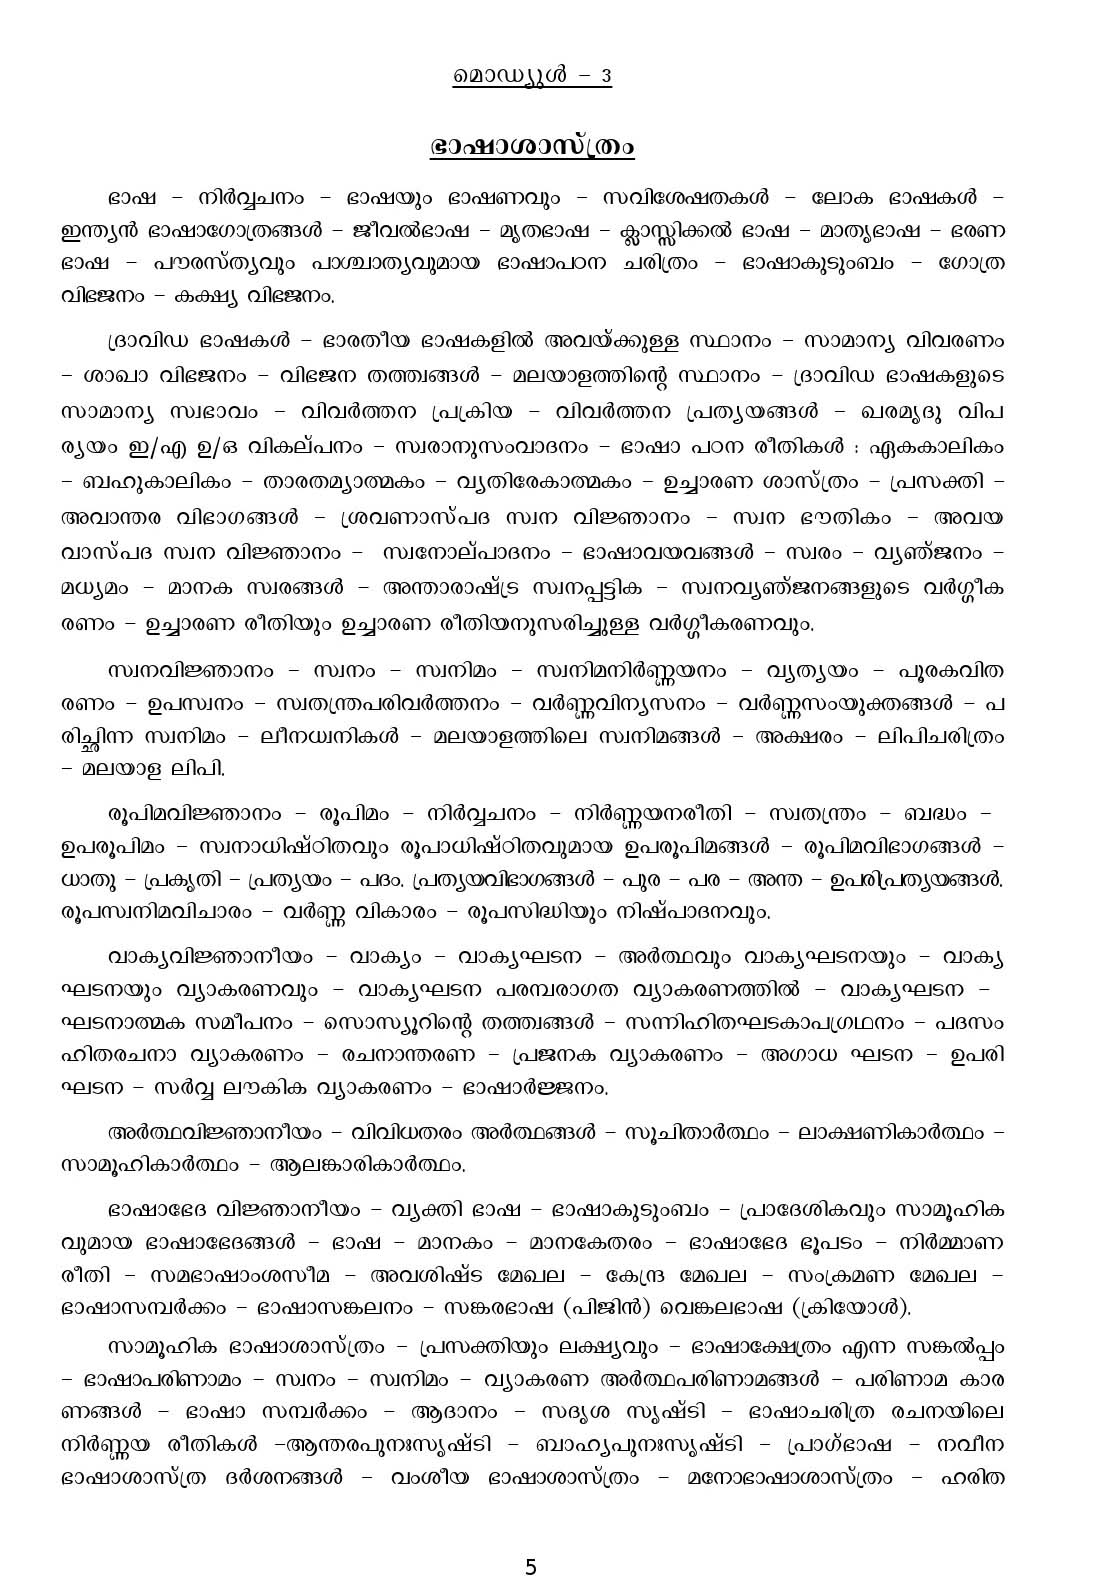 Kerala PSC Assistant Professor Malayalam Exam Syllabus - Notification Image 5